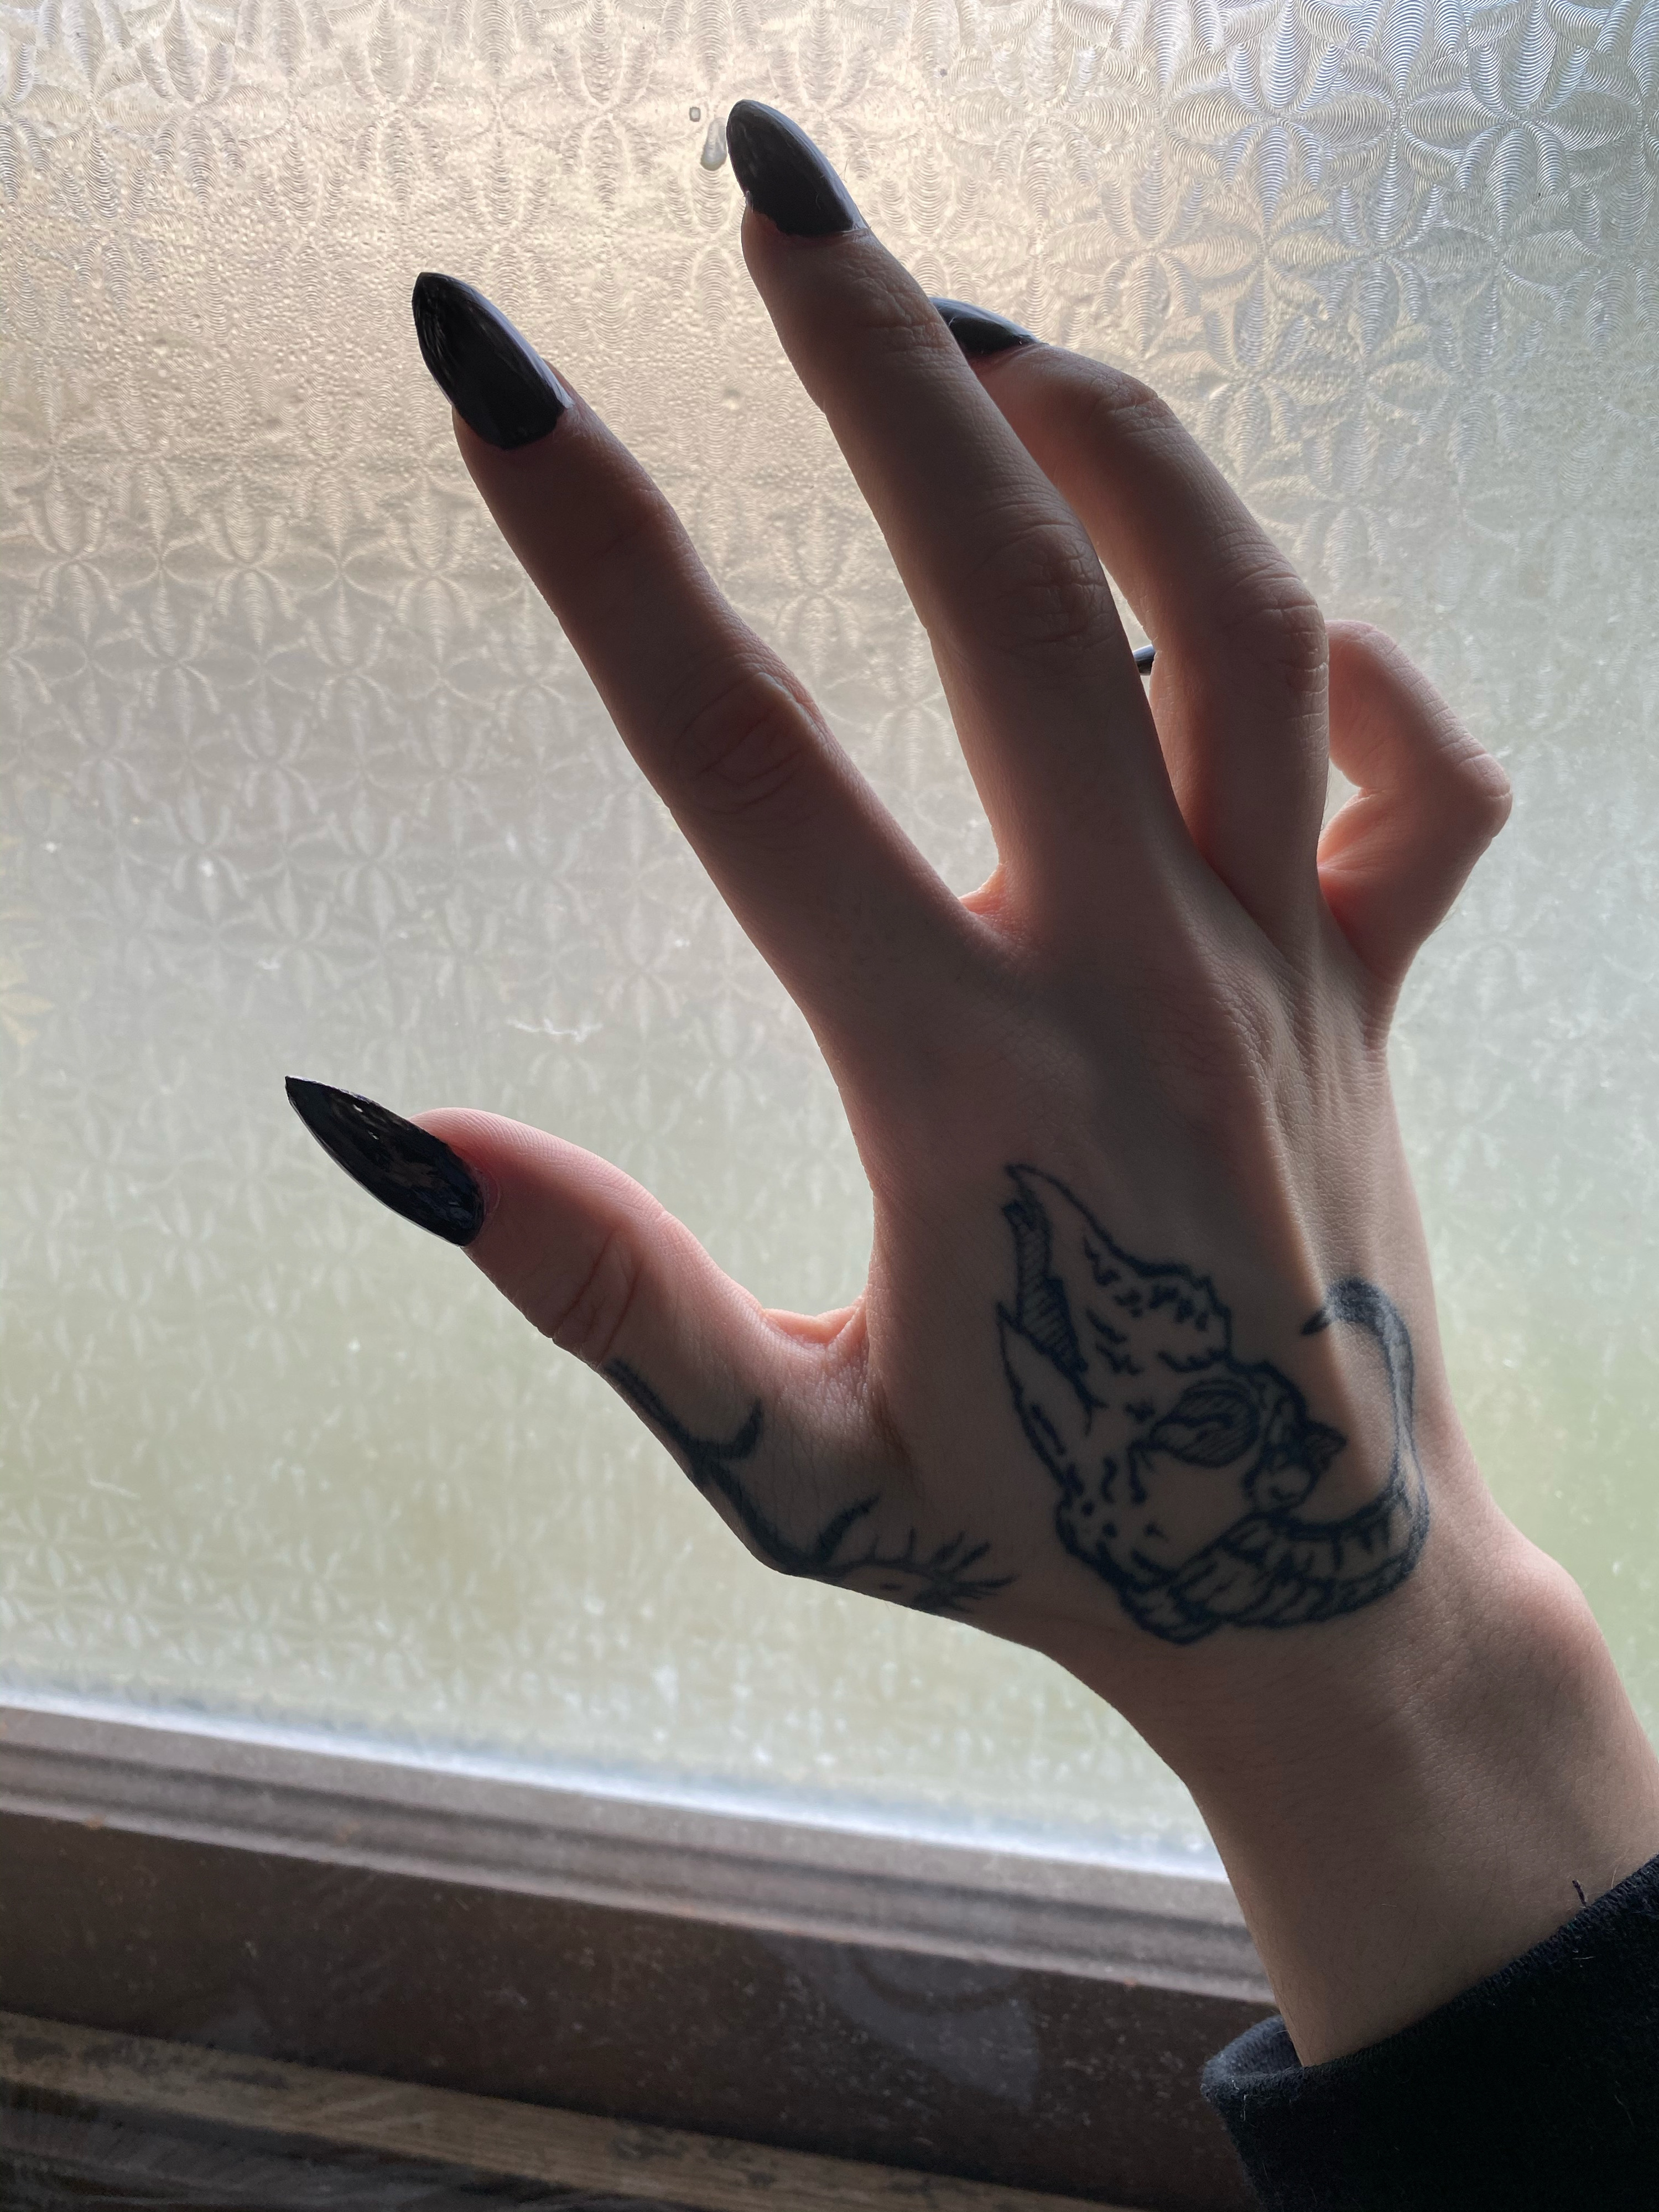 Hand Spooky Creepy Tattoo Inked Image By Cazion Fhey